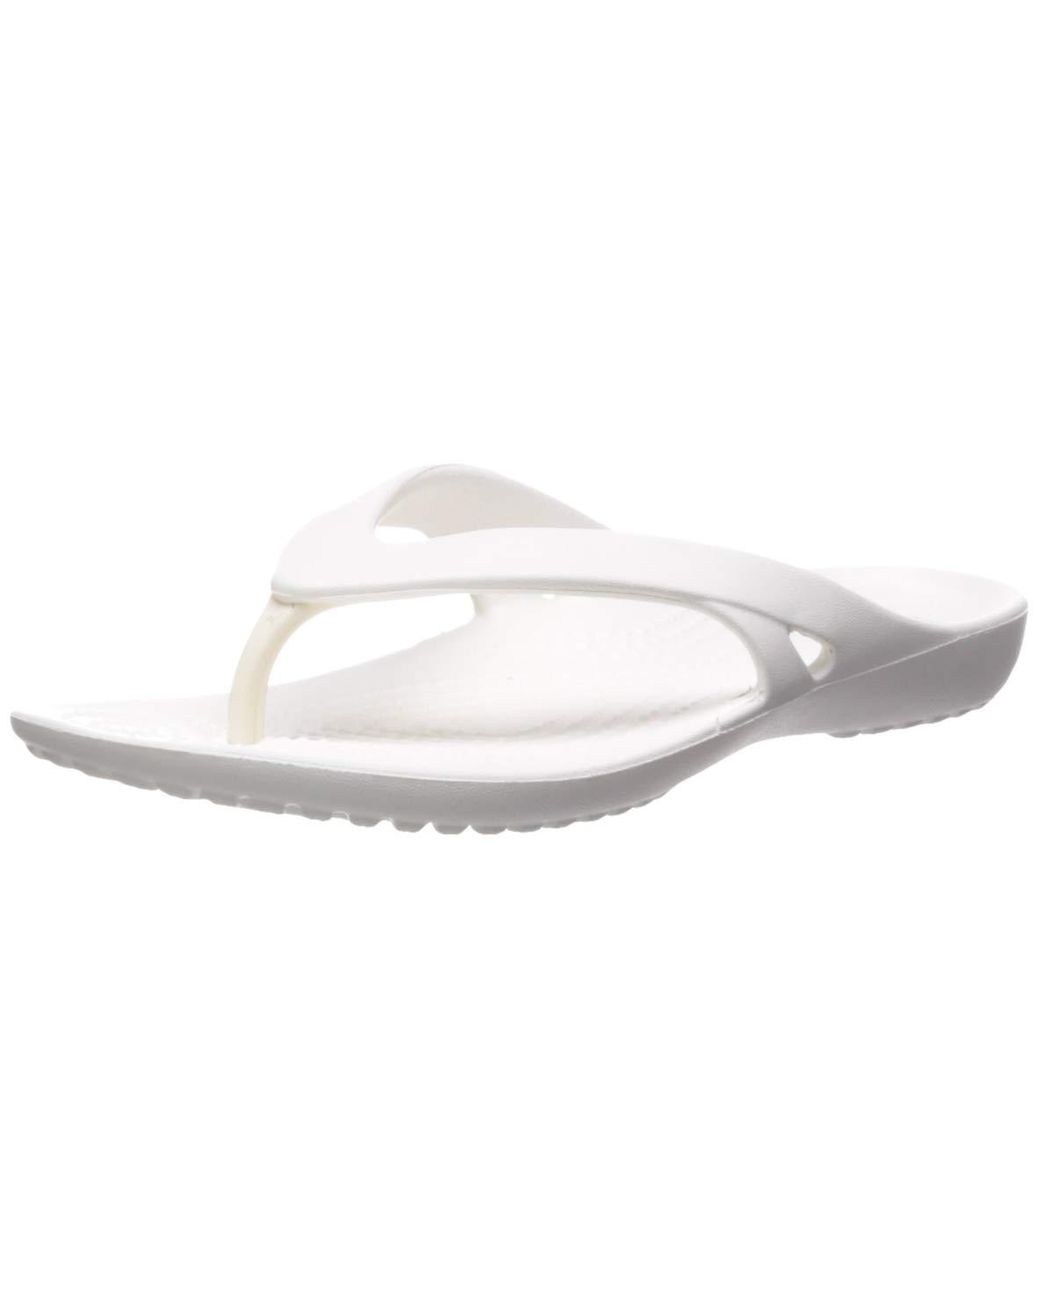 Crocs™ Kadee Ii Flip Flop-discontinued in White - Save 74% | Lyst